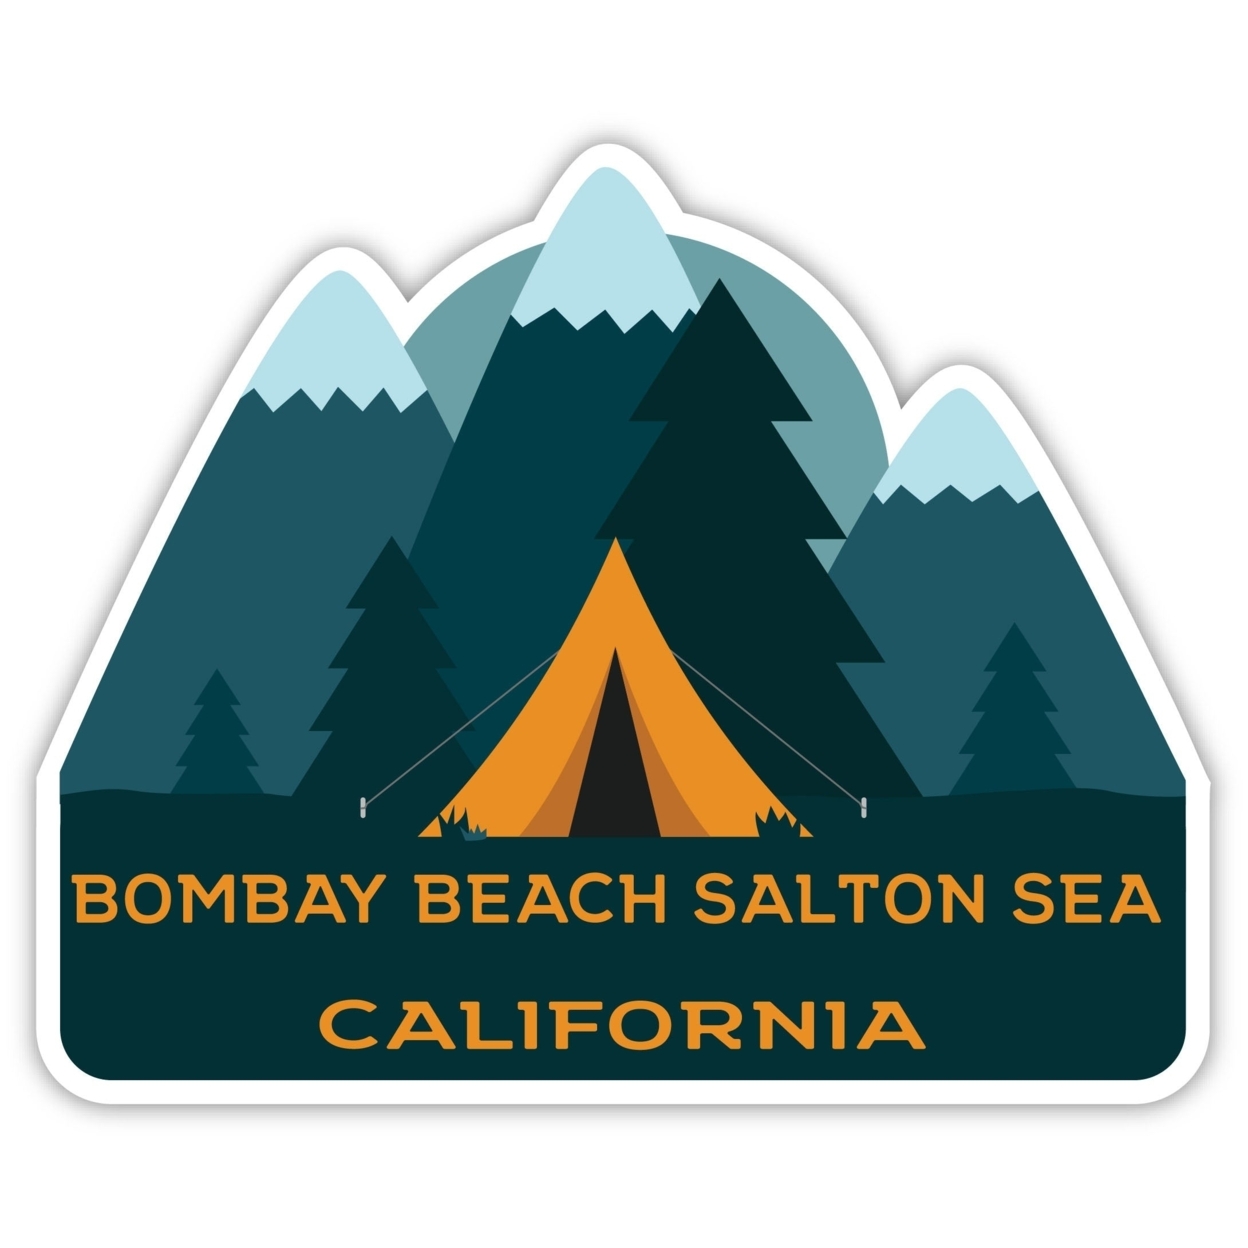 Bombay Beach Salton Sea California Souvenir Decorative Stickers (Choose Theme And Size) - Single Unit, 6-Inch, Tent